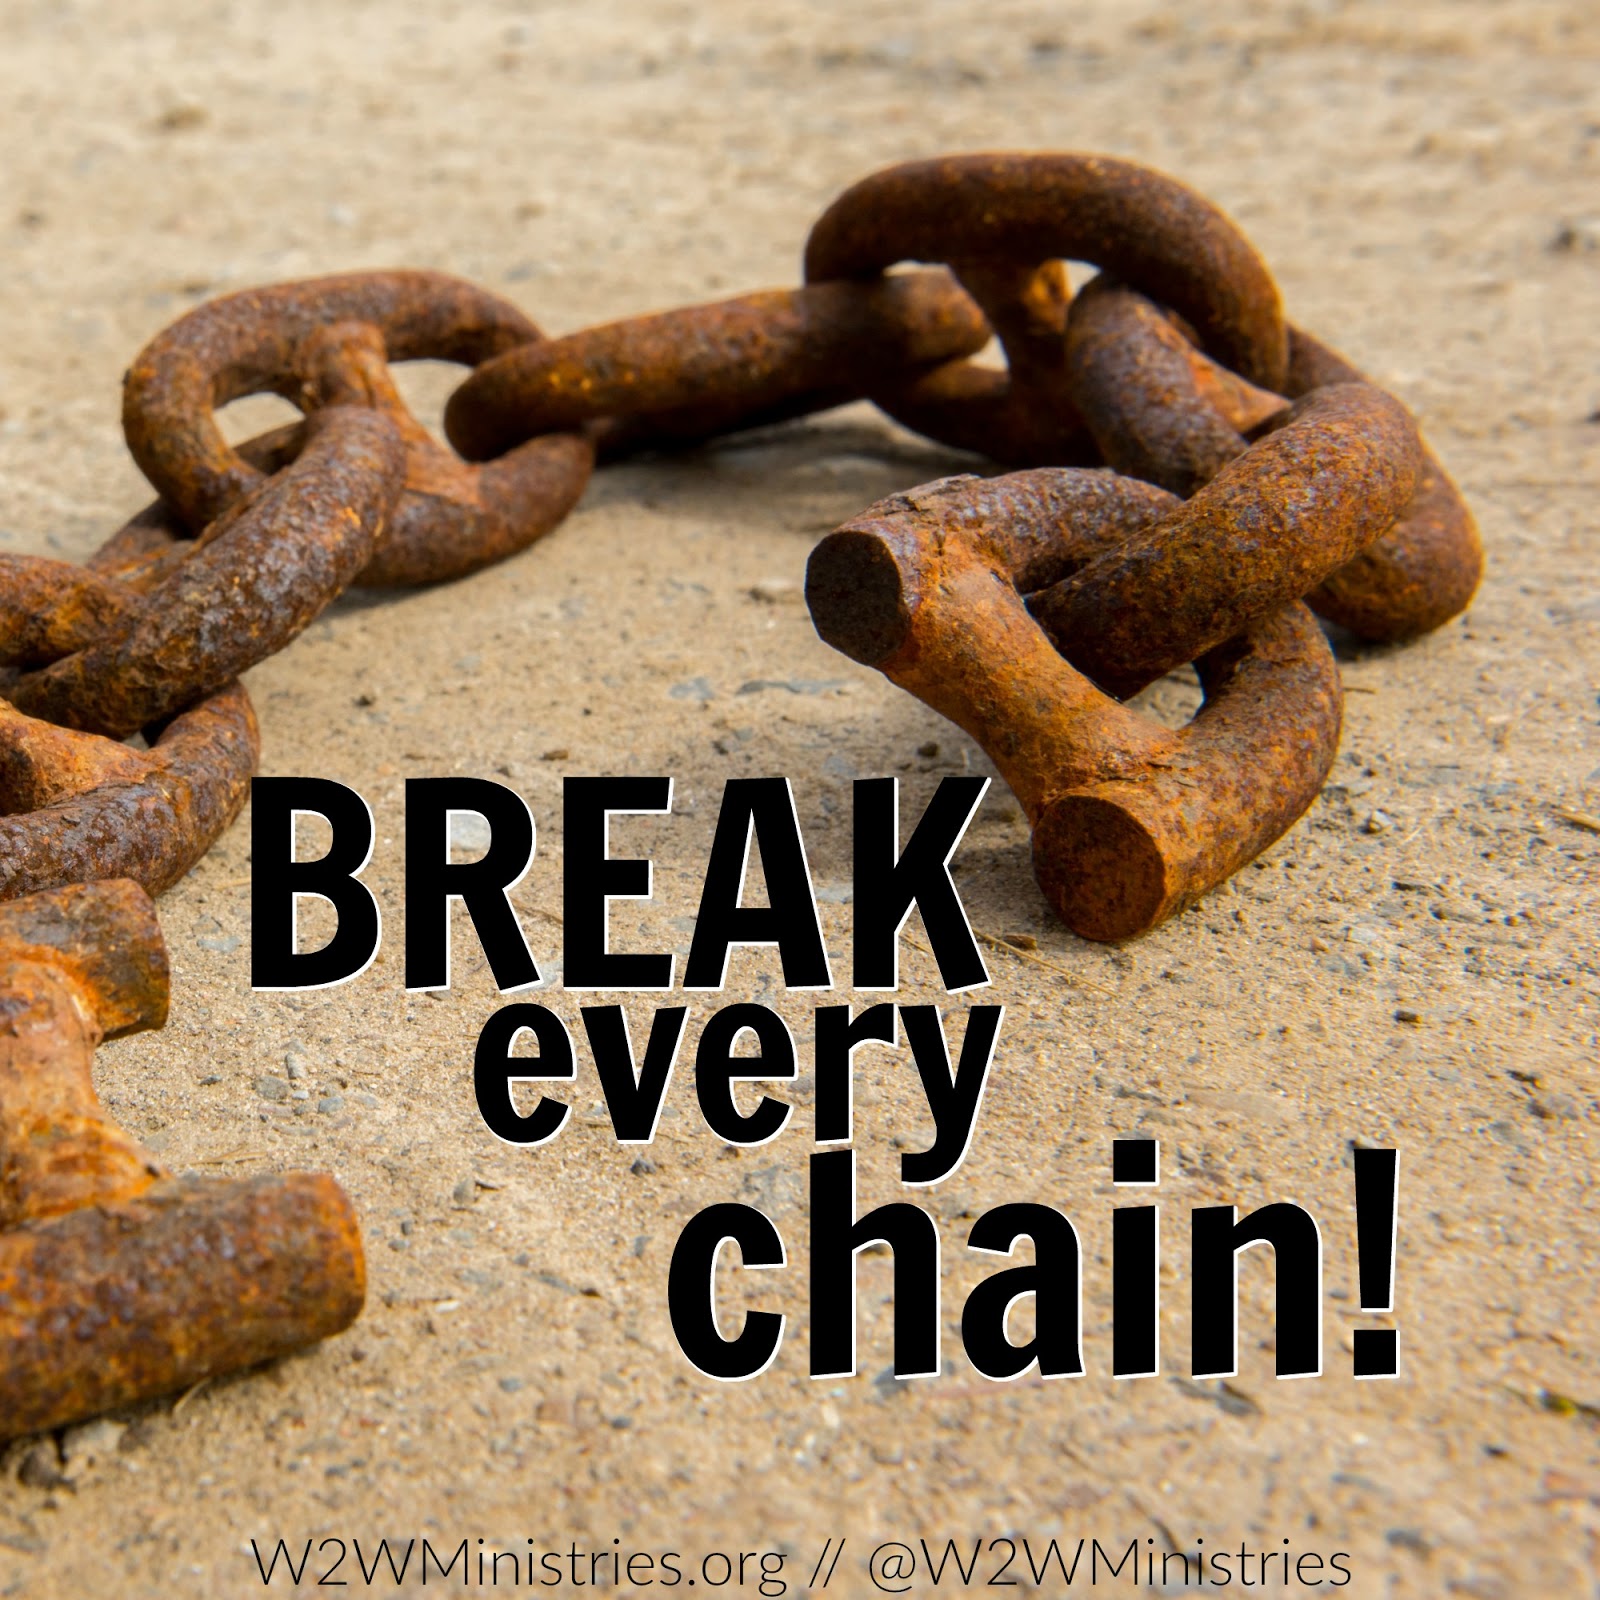 Woman to Woman: Break Every Chain